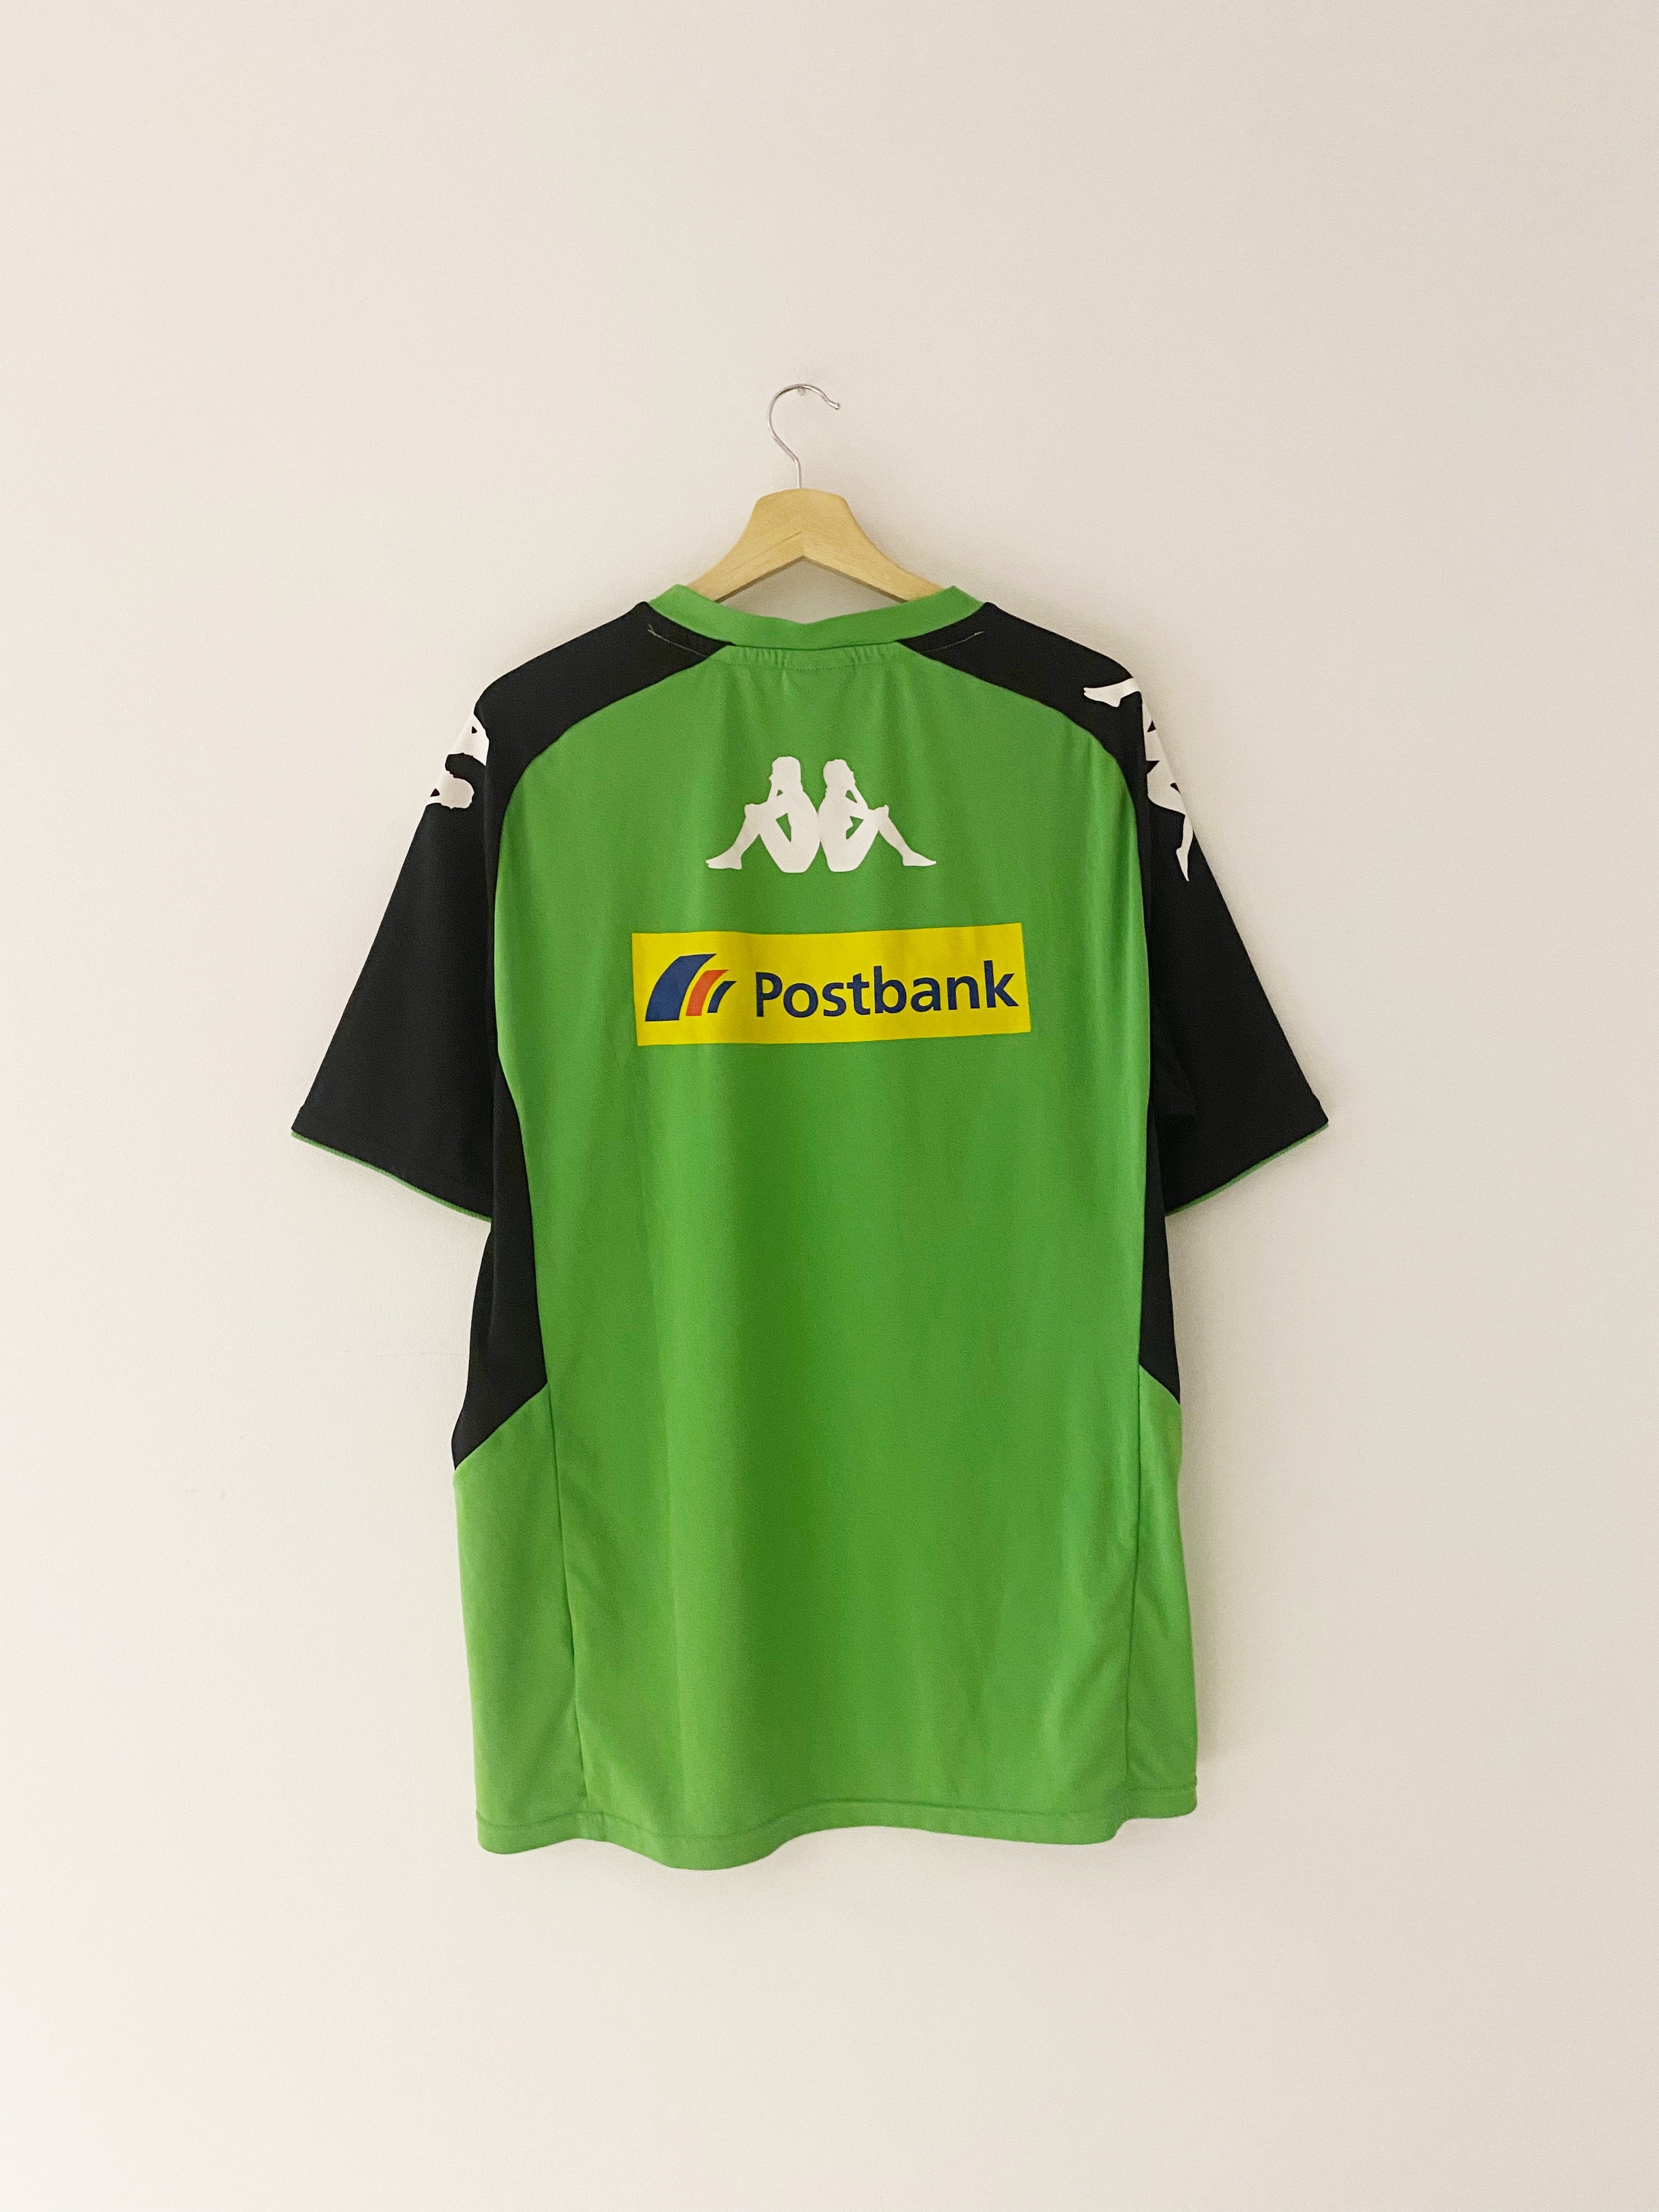 2013/14 Borussia Monchengladbach Training Shirt (XL) 8.5/10